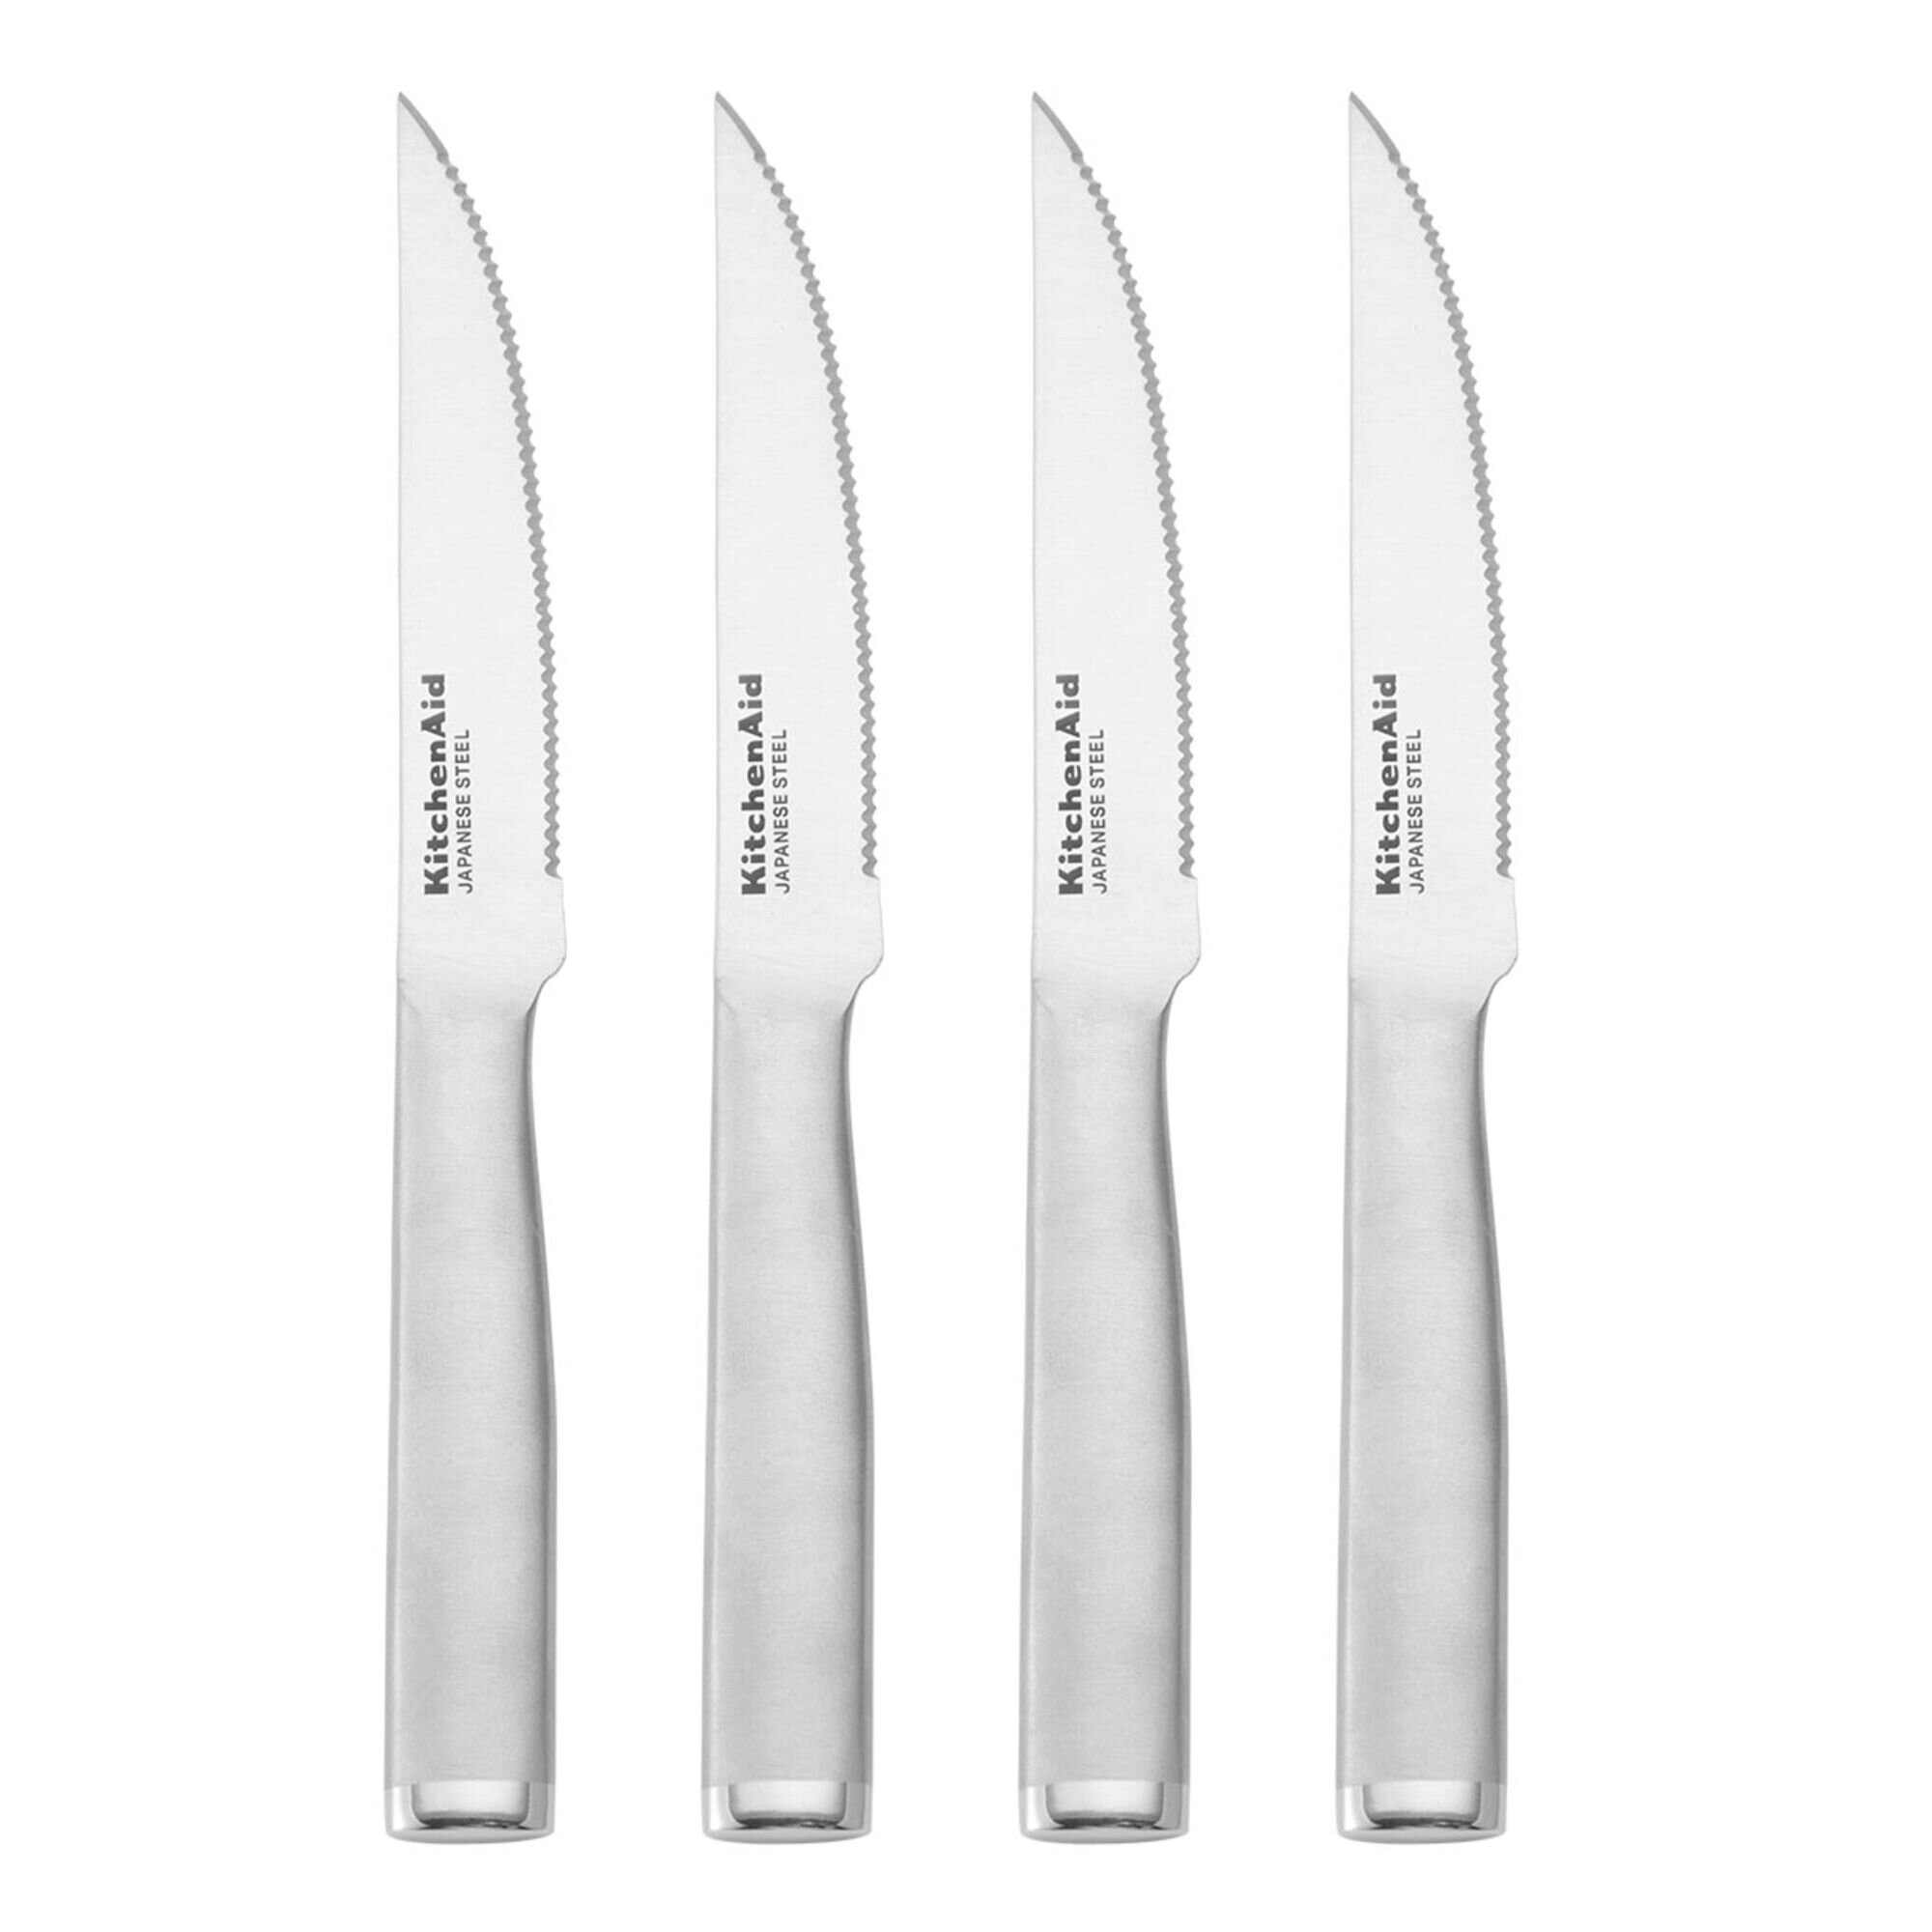 KitchenAid 14 Piece Forged Cutlery Knife Set, Japanese Steel